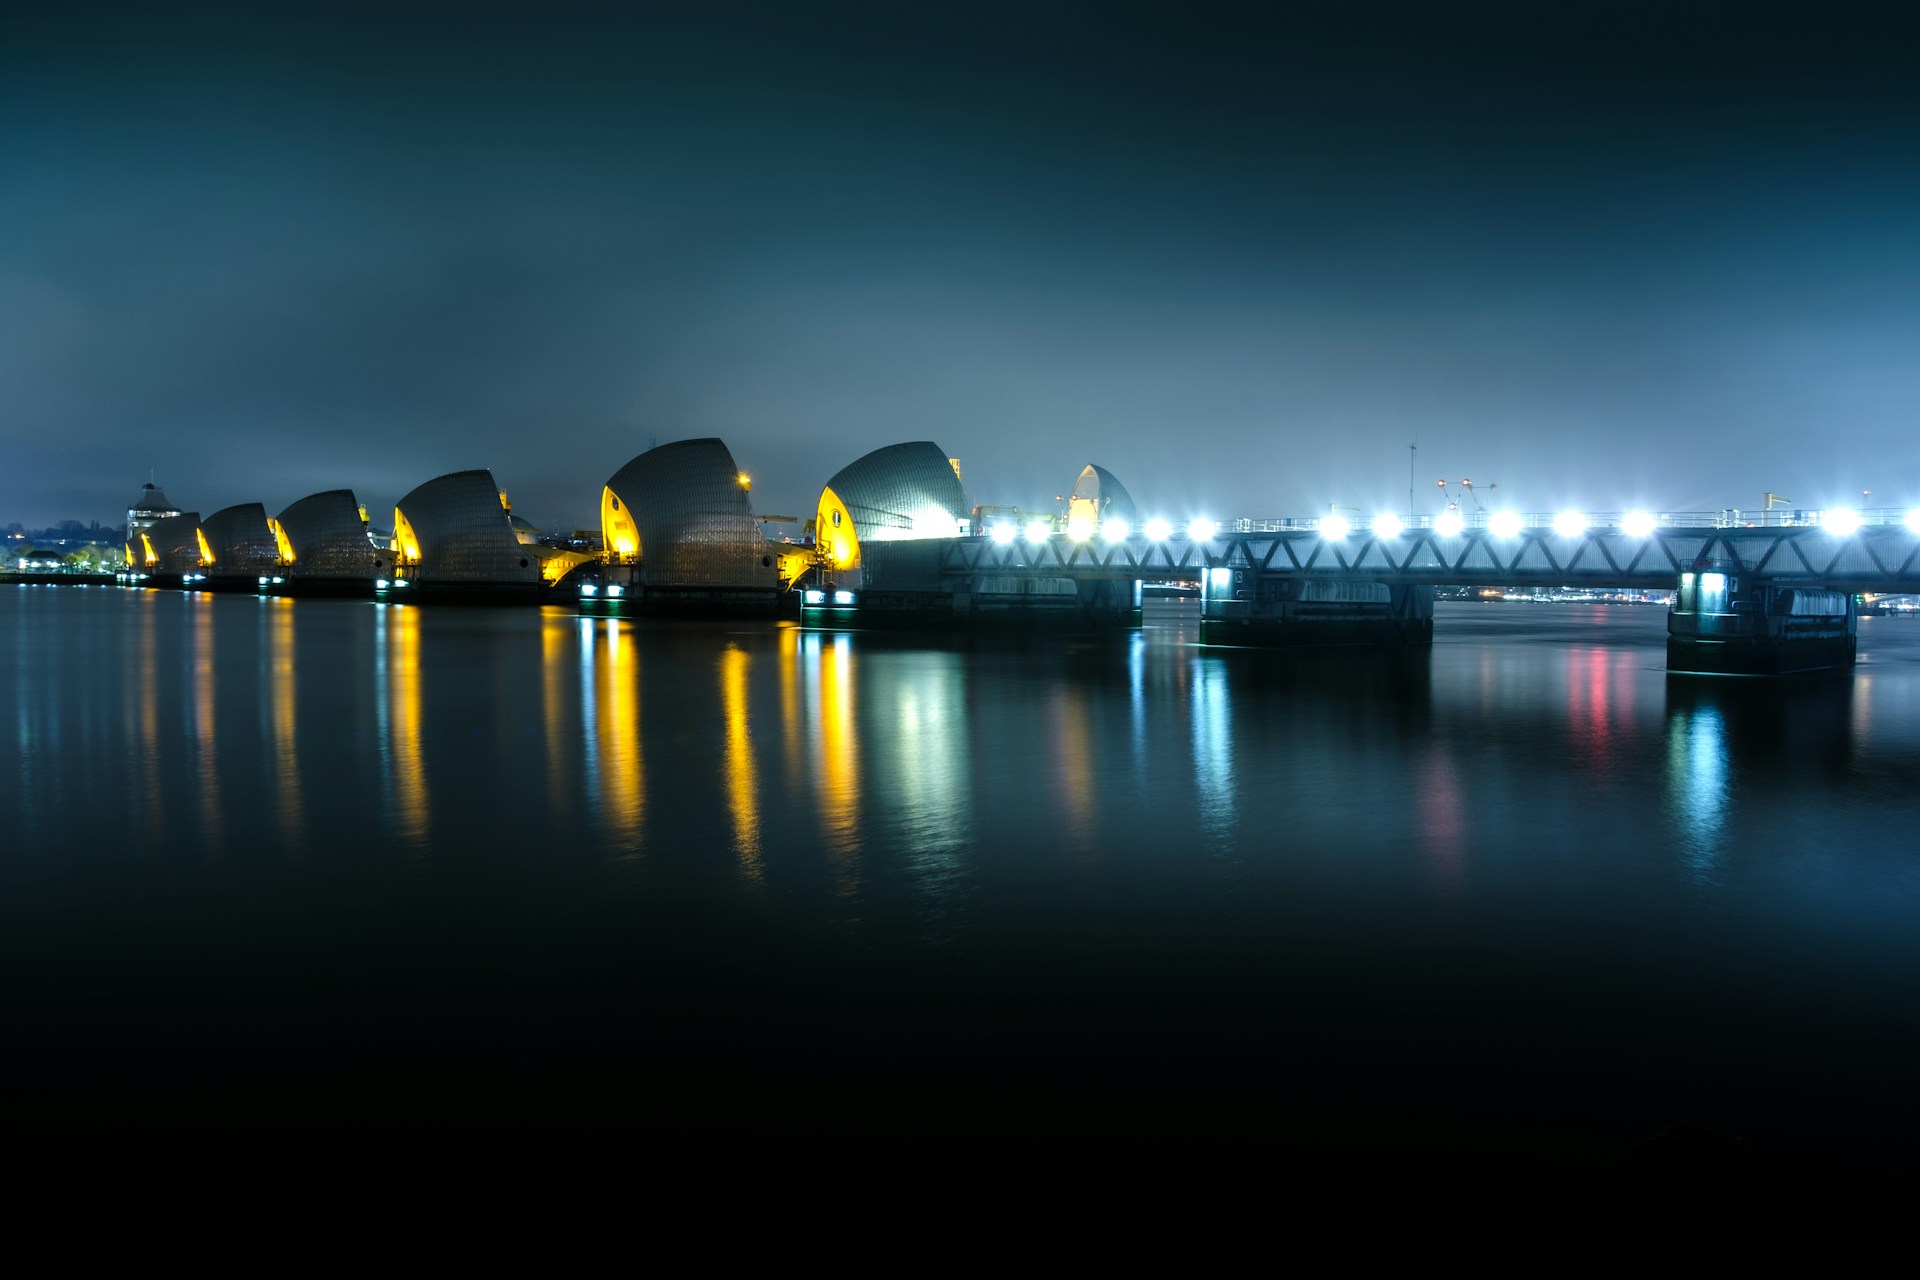 Thames Barrier lit up at night